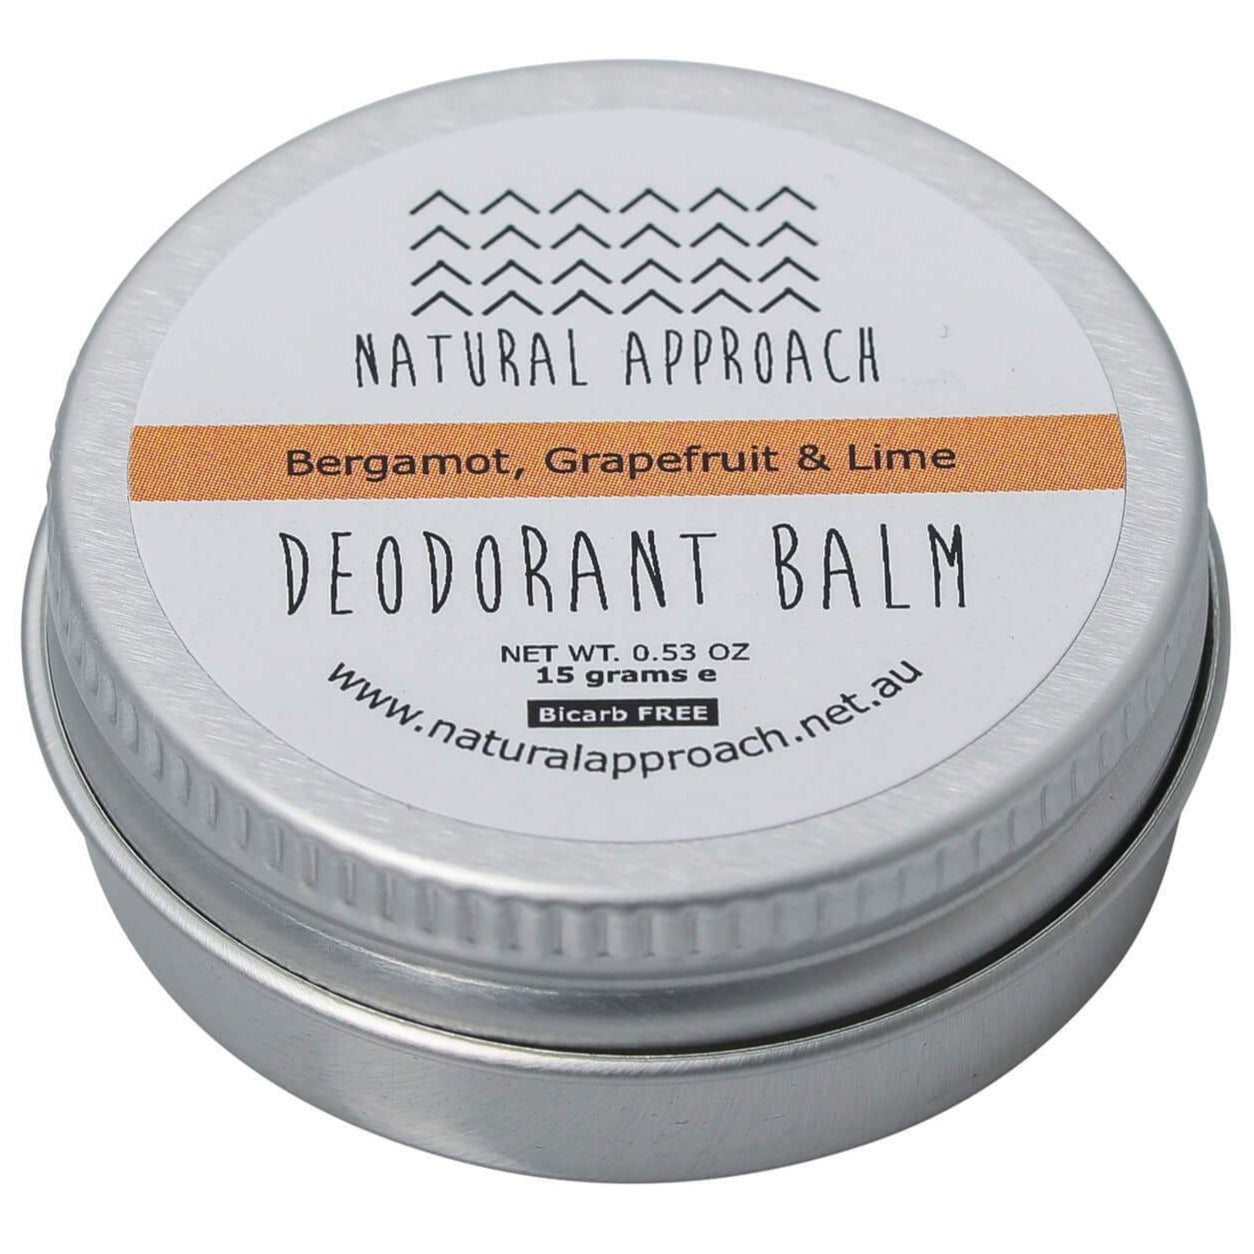 Bicarb free natural deodorant balm. Made in Australia.